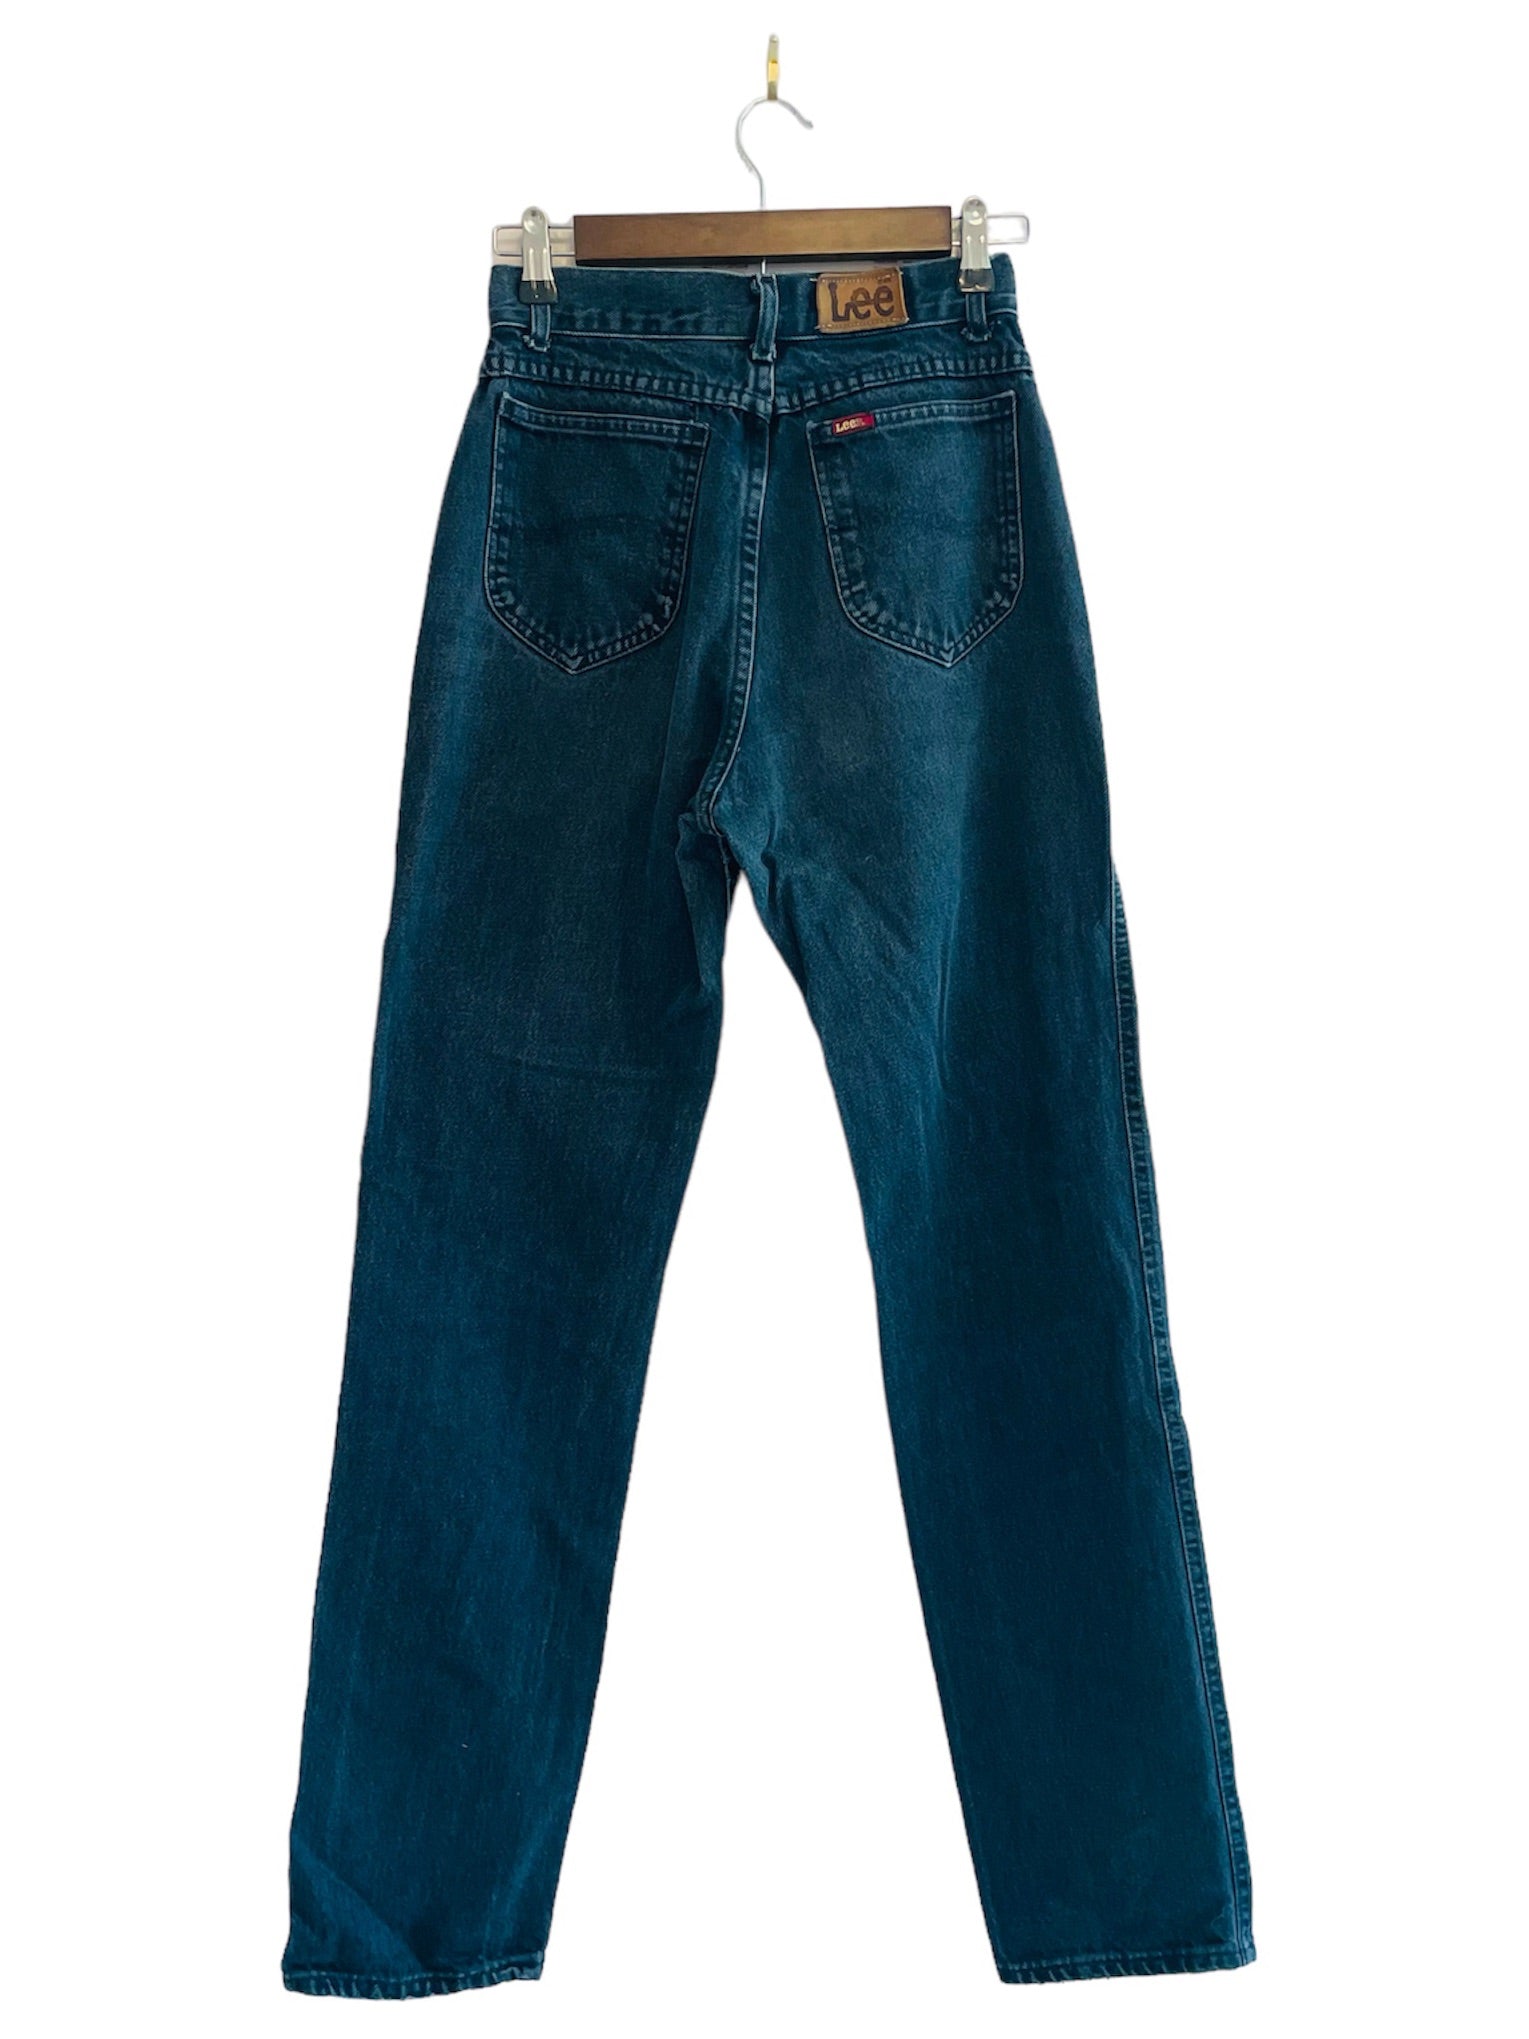 Washed Black Vintage Straight Lee Jeans Size: Waist 26", Hip 36", Rise 11", Inseam 32"